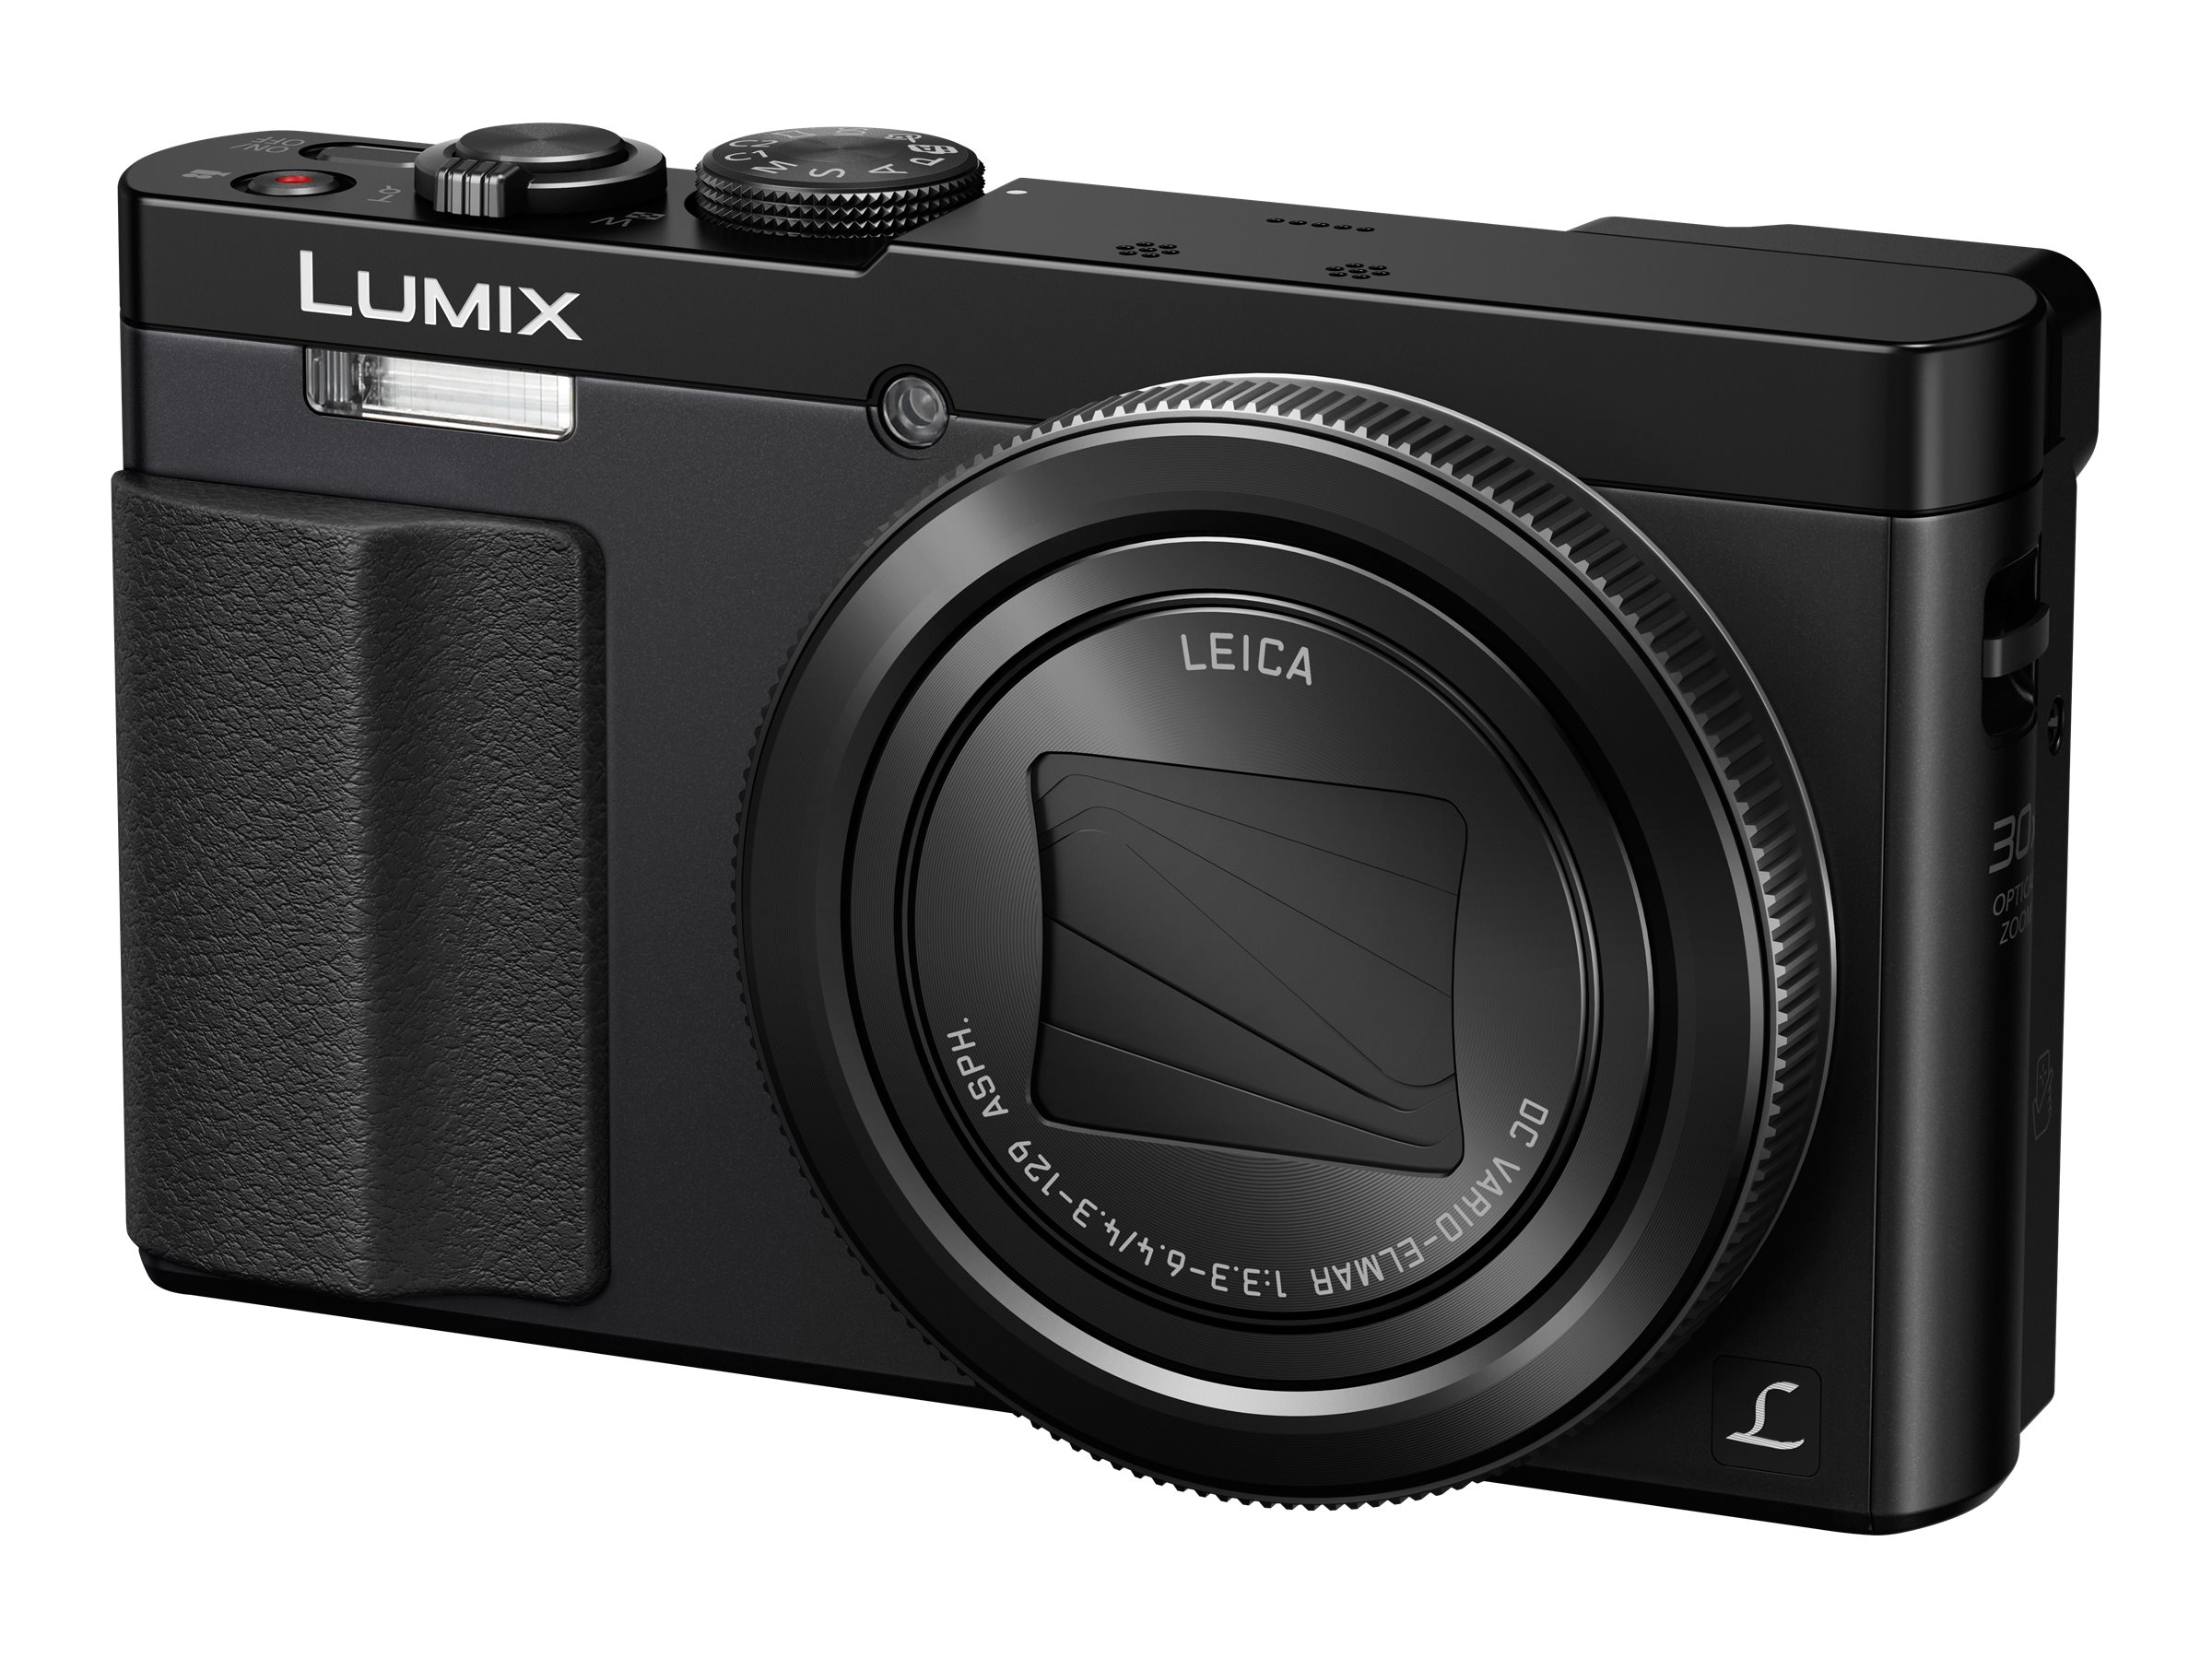 Panasonic Lumix DMC-ZS50 - Digital camera - compact - 12.1 MP - 1080p - 30x optical zoom - Leica - Wi-Fi, NFC - black - image 1 of 10